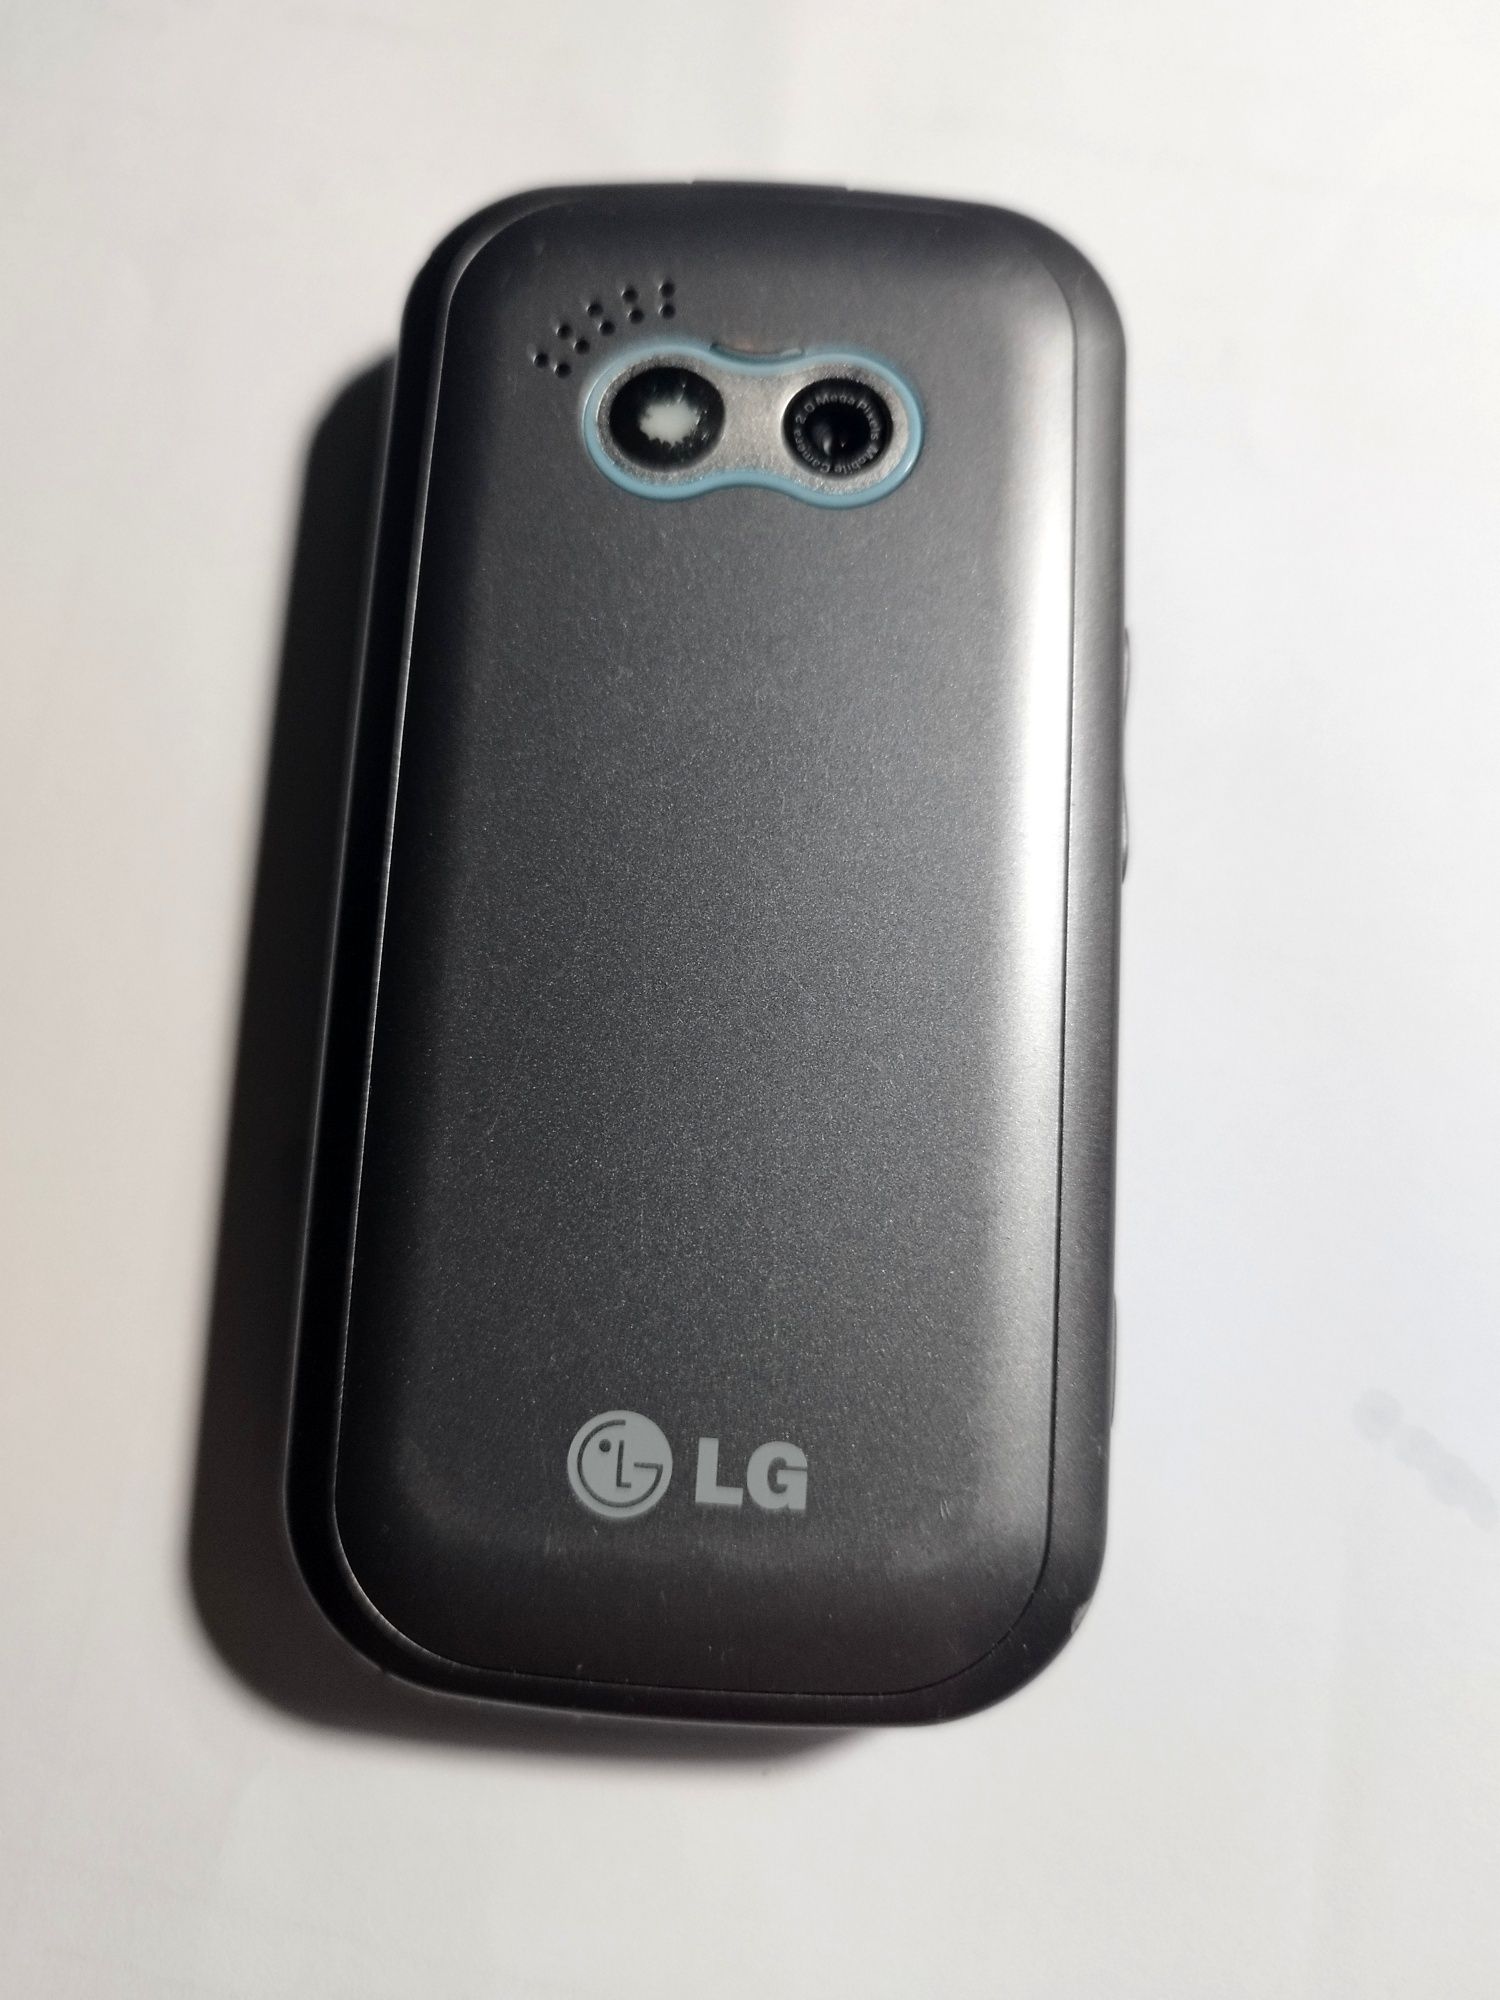 LG K360 liber de rețea ( testat Vodafone)